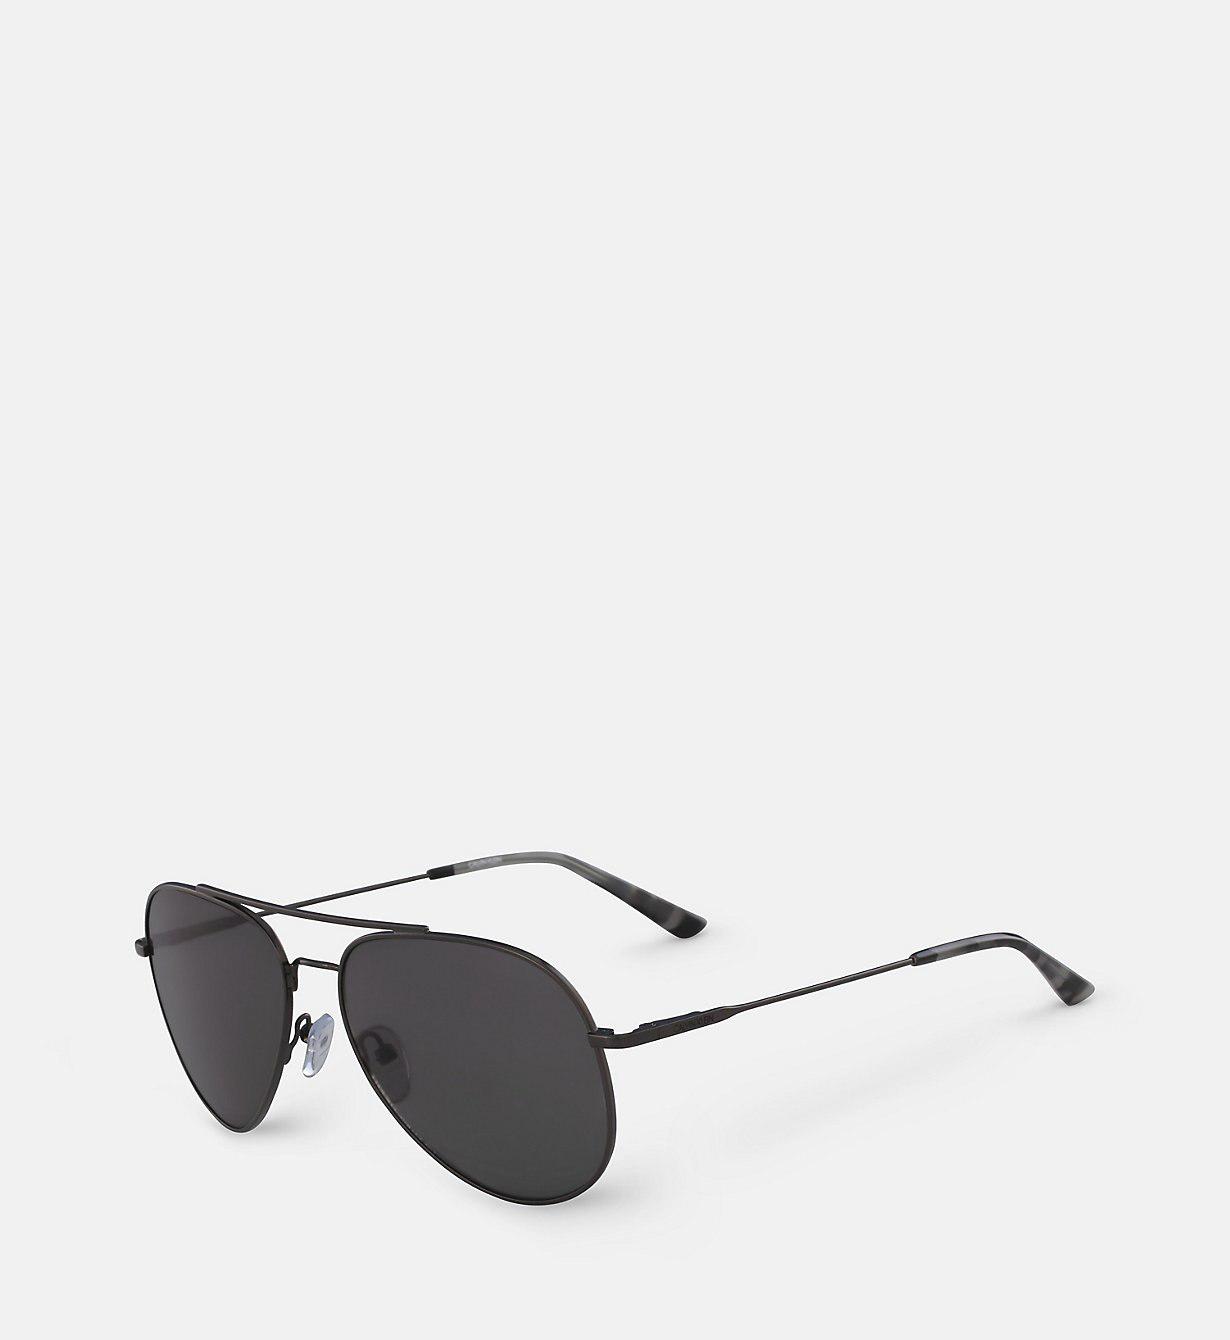 Calvin Klein Aviator Sunglasses Ck18105s59 in Grey (Grey) - Lyst